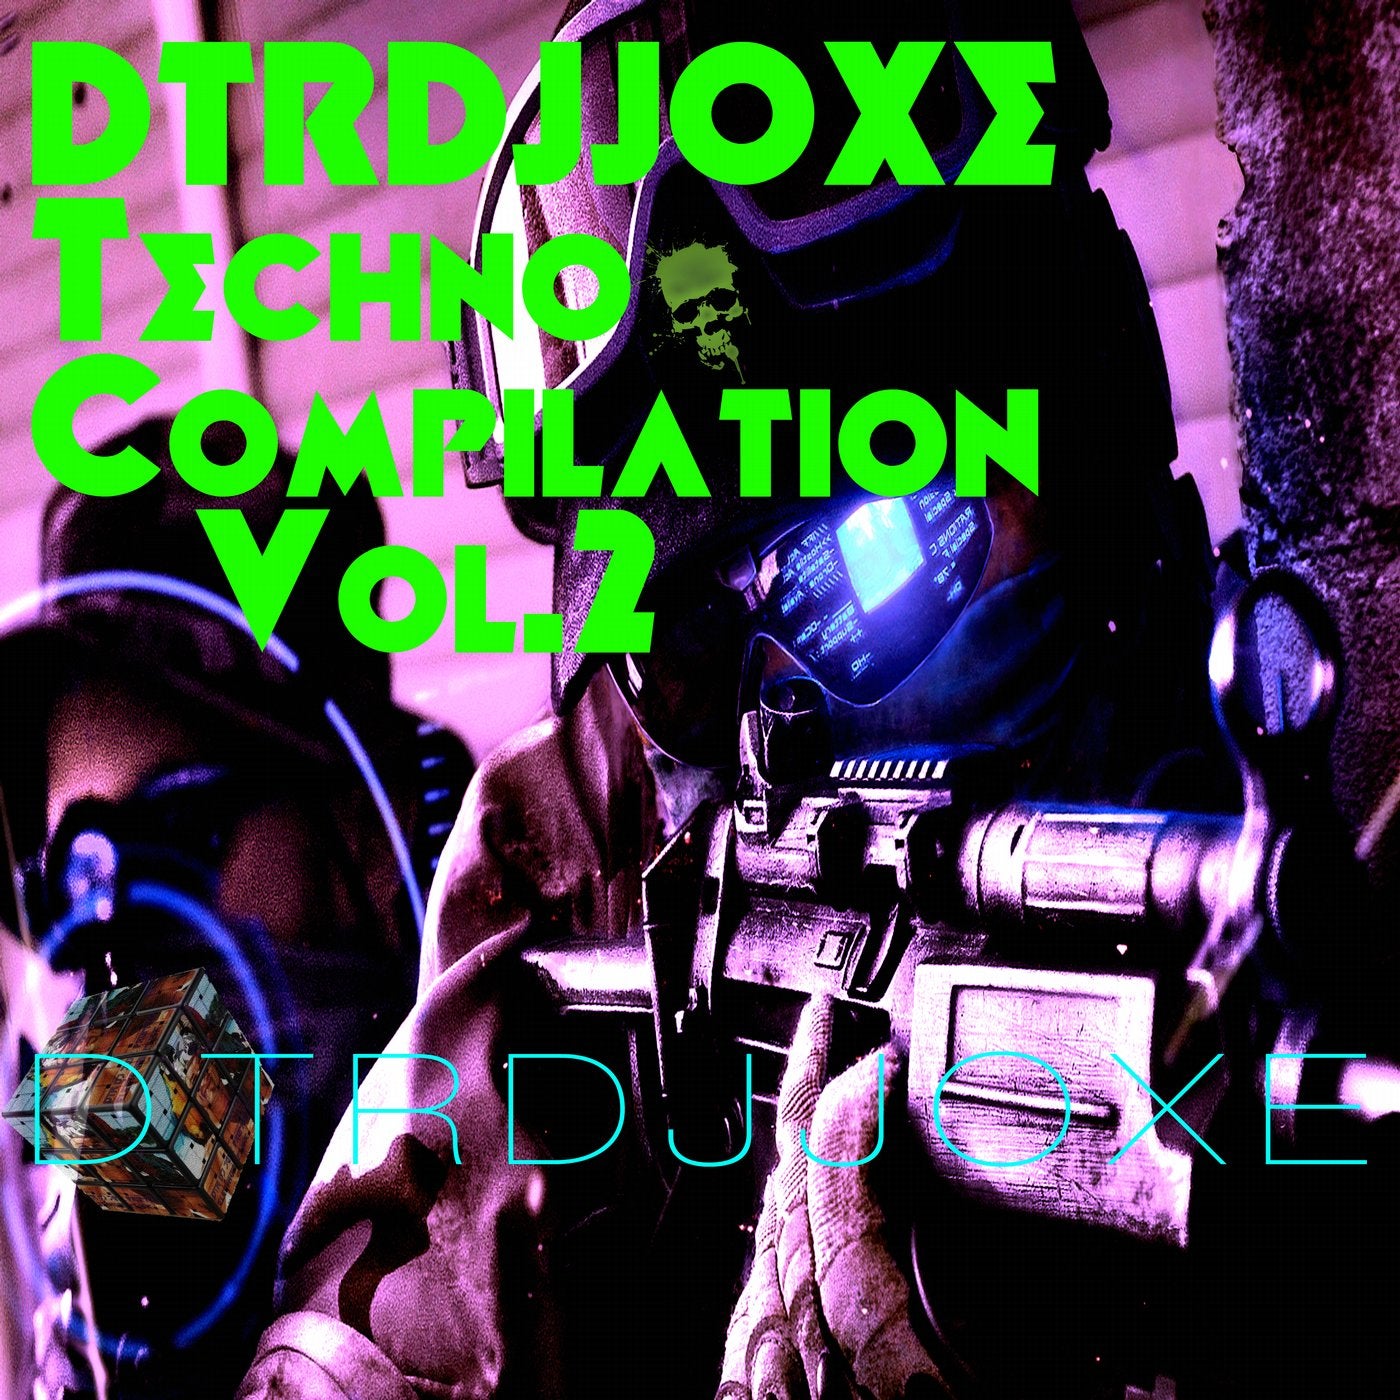 Dtrdjjoxe Techno Compilation, Vol. 2